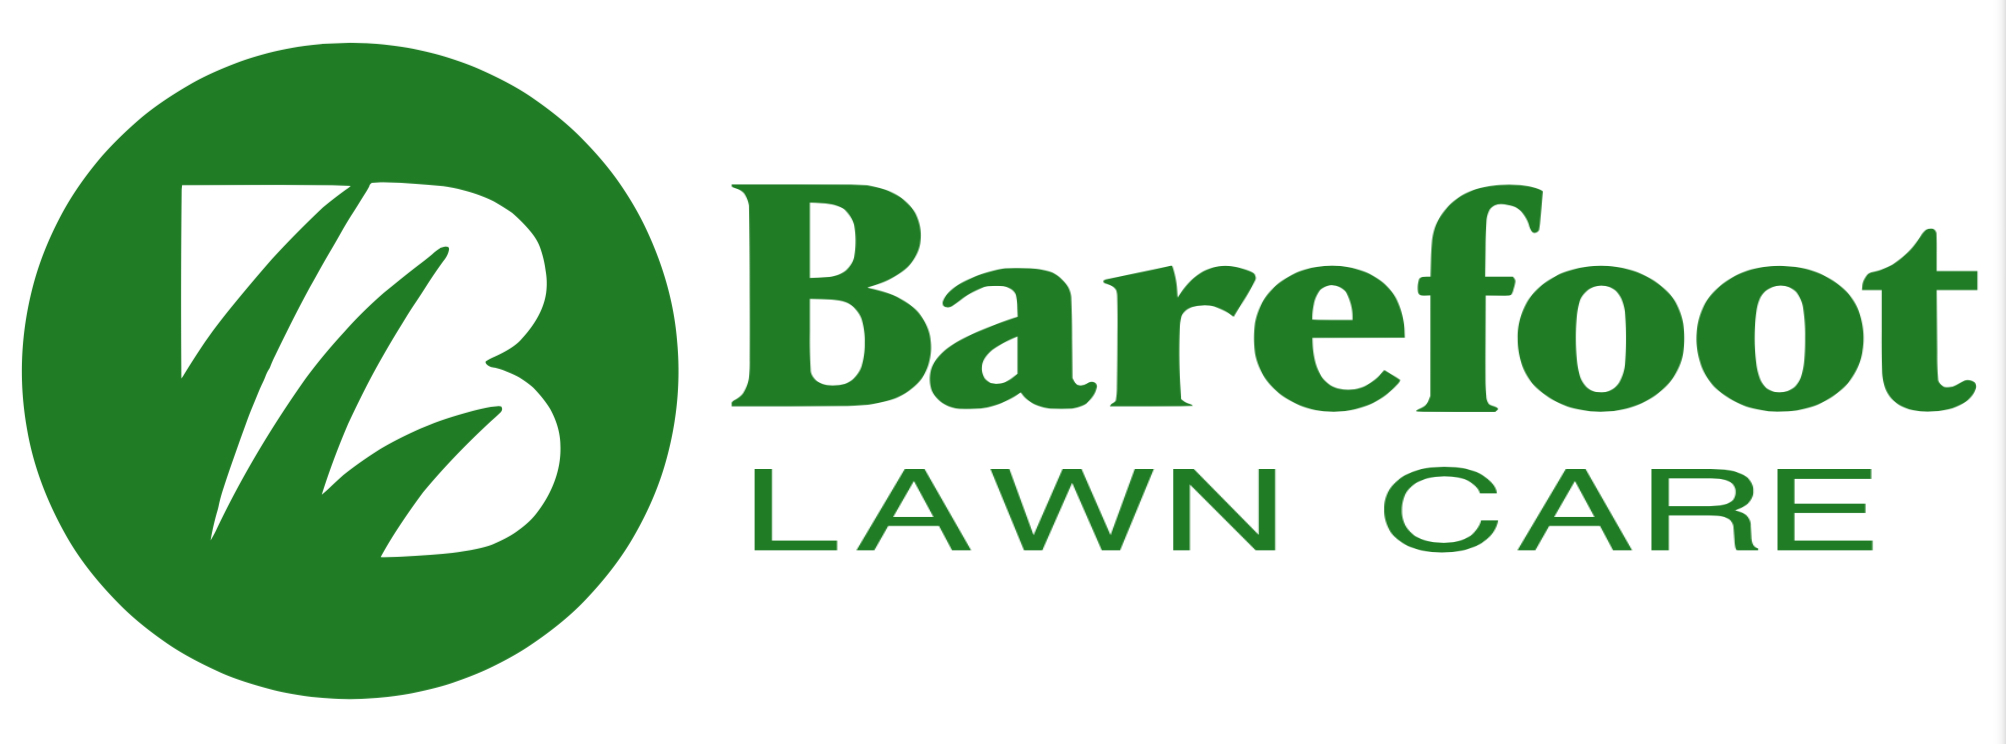 Barefoot Lawn